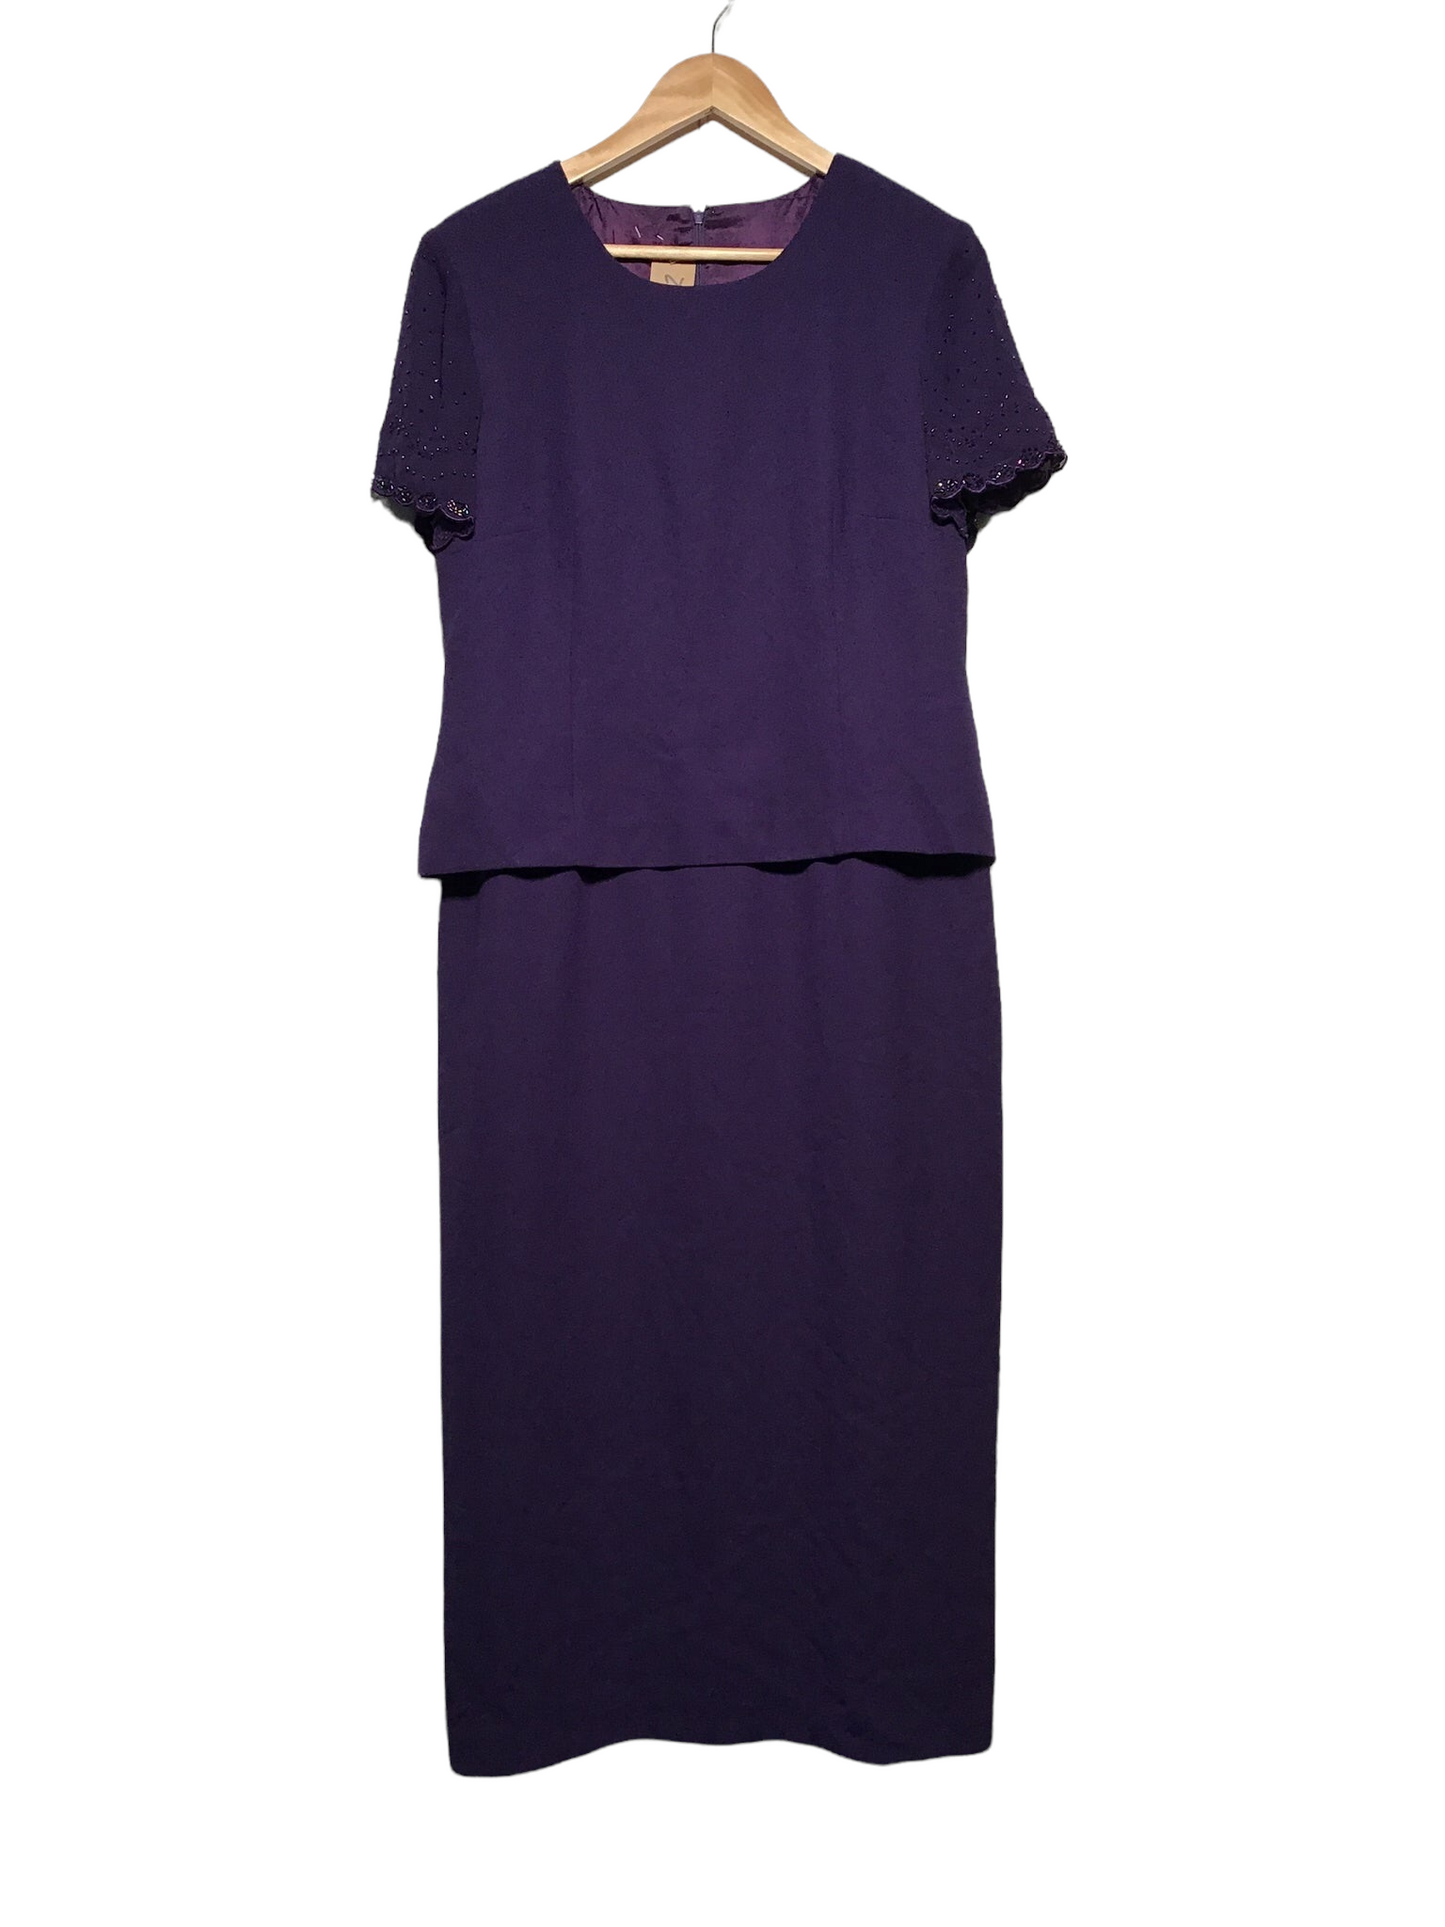 Beaded Sleeve Evening Dress (Size L)